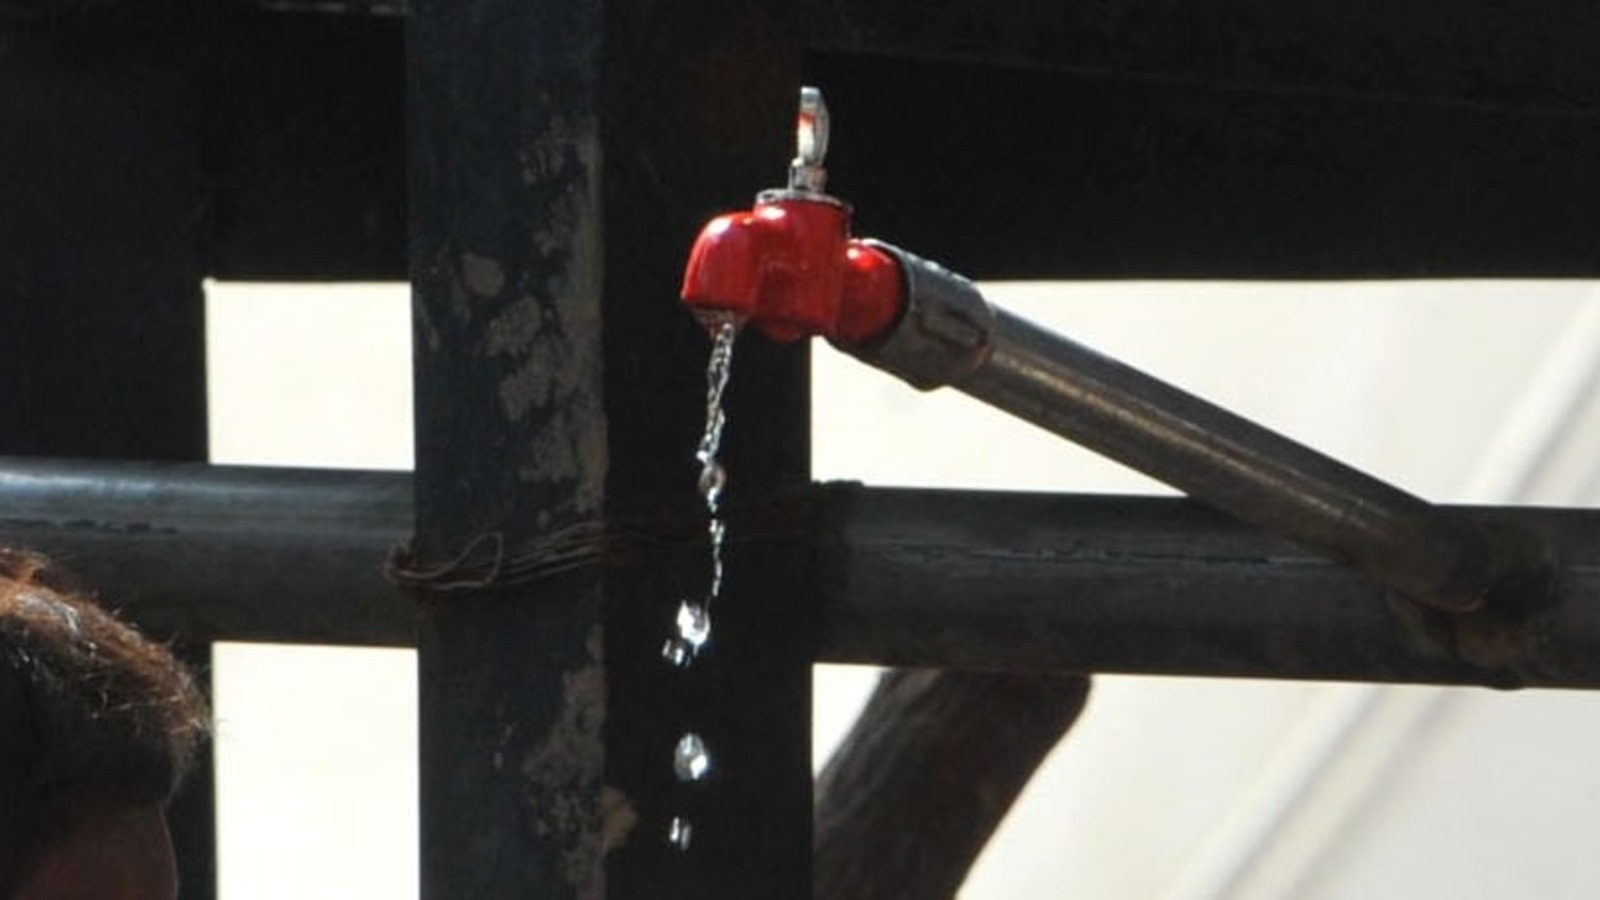 Rawalpindi faces acute water shortage amid scorching heat: Report - Hindustan Times